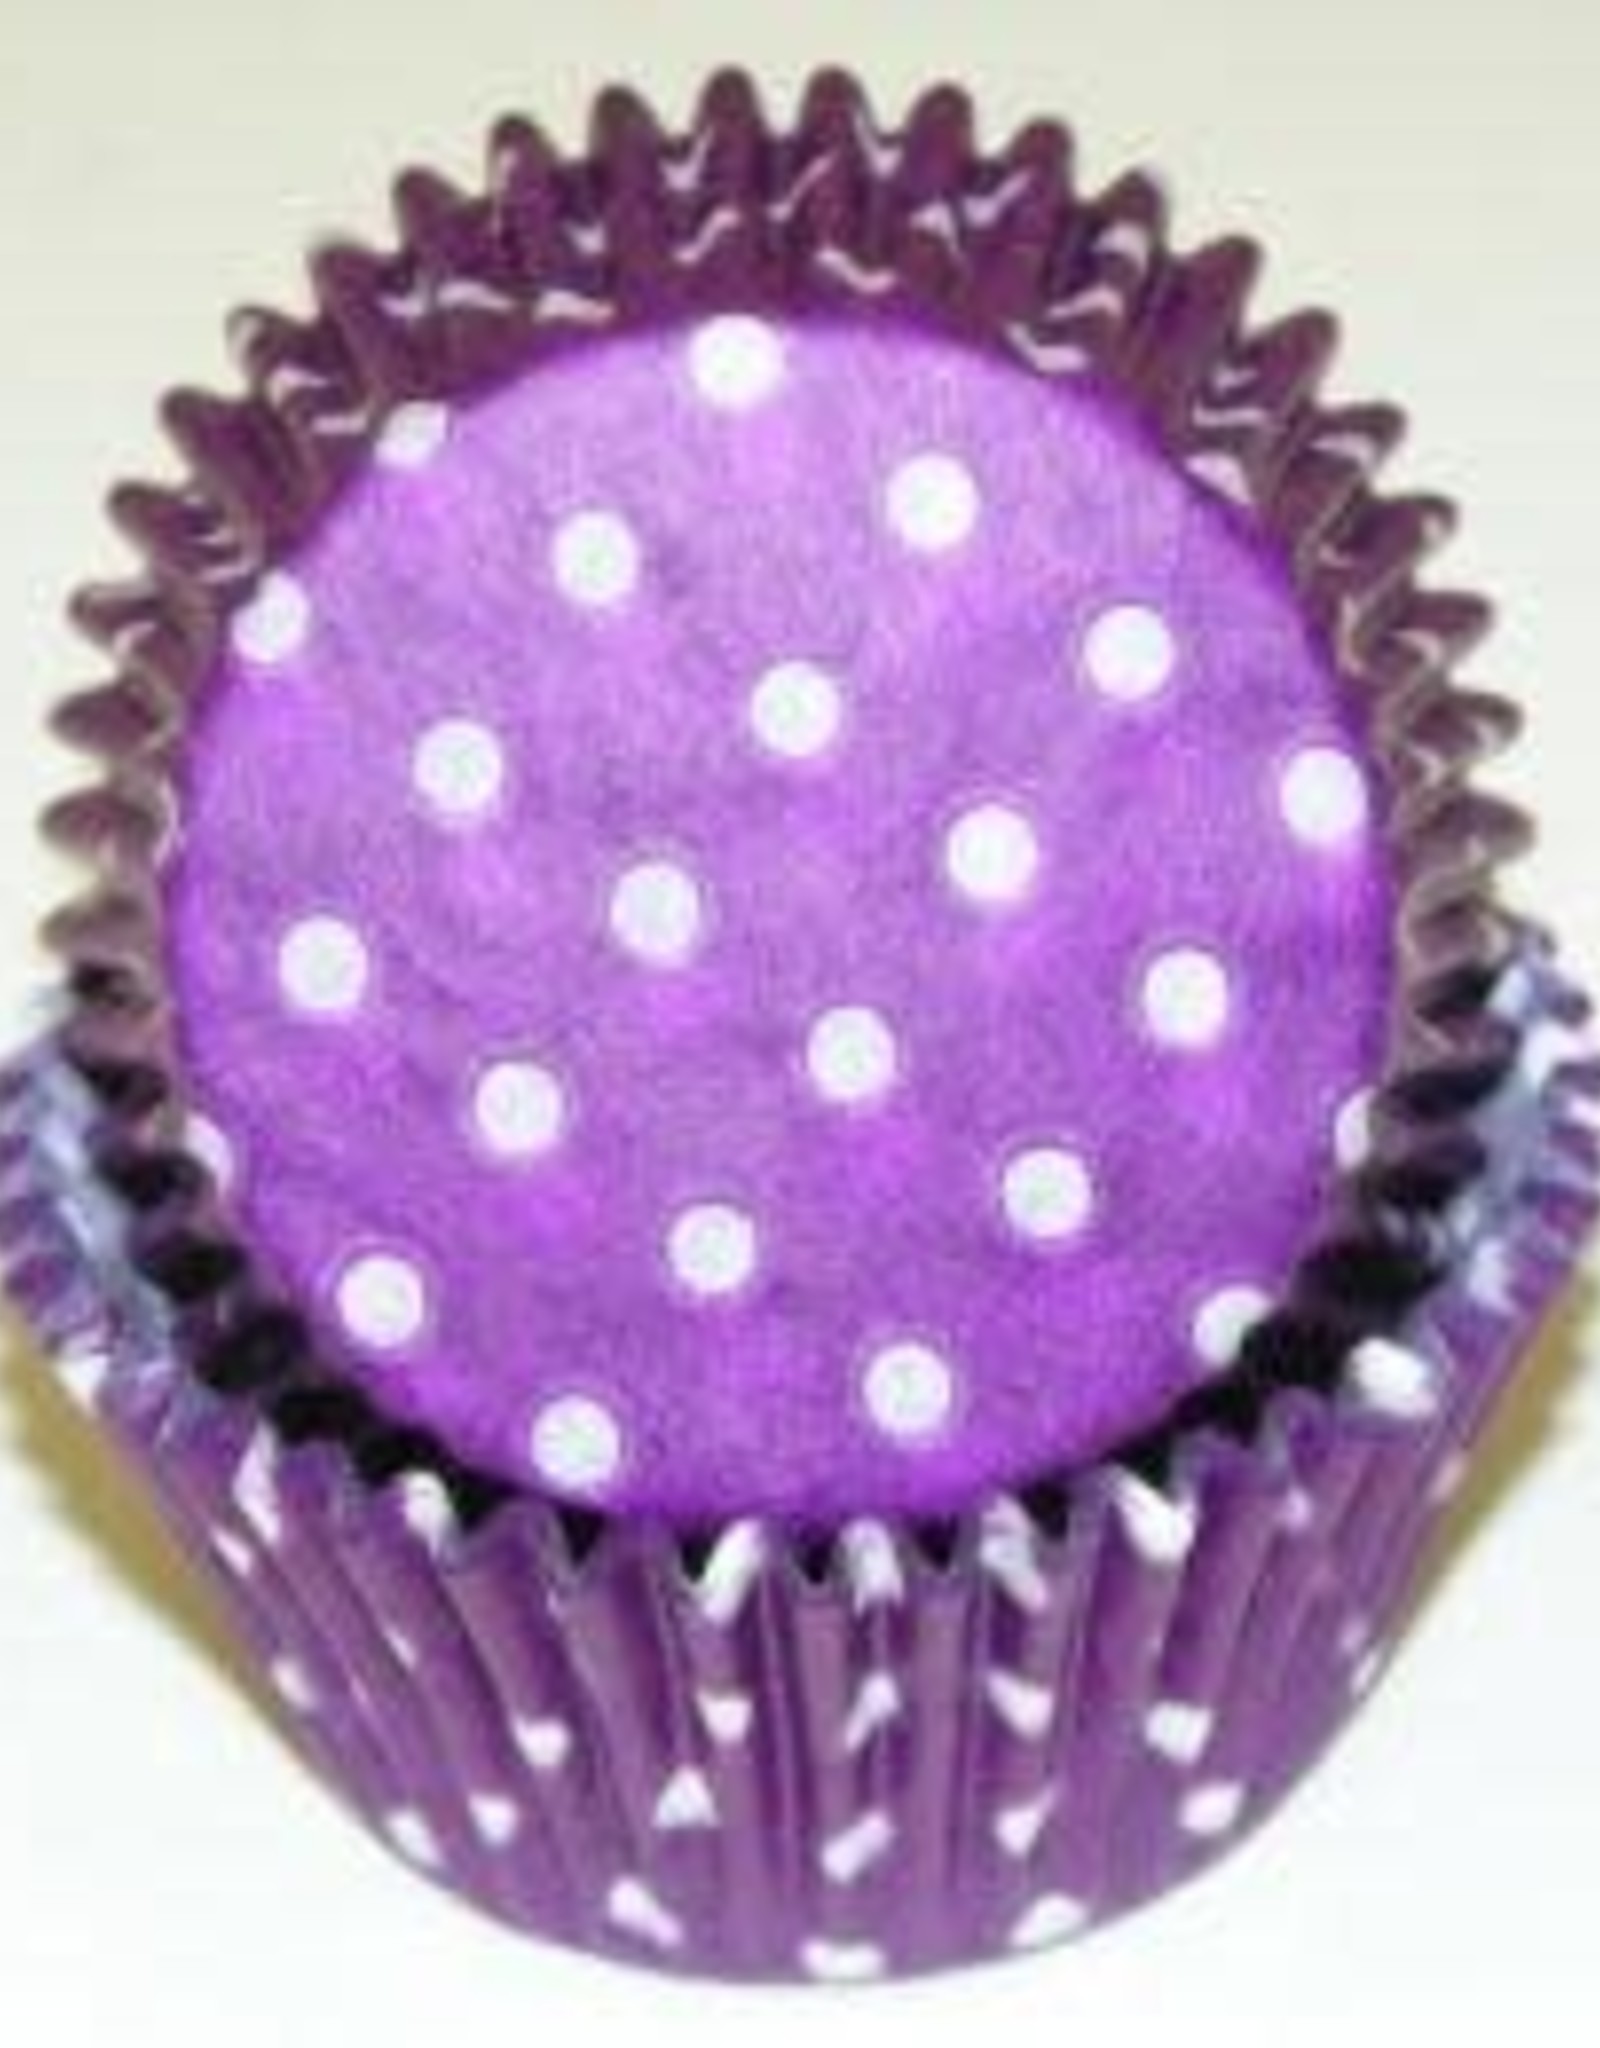 Purple Polka Dot Baking Cups